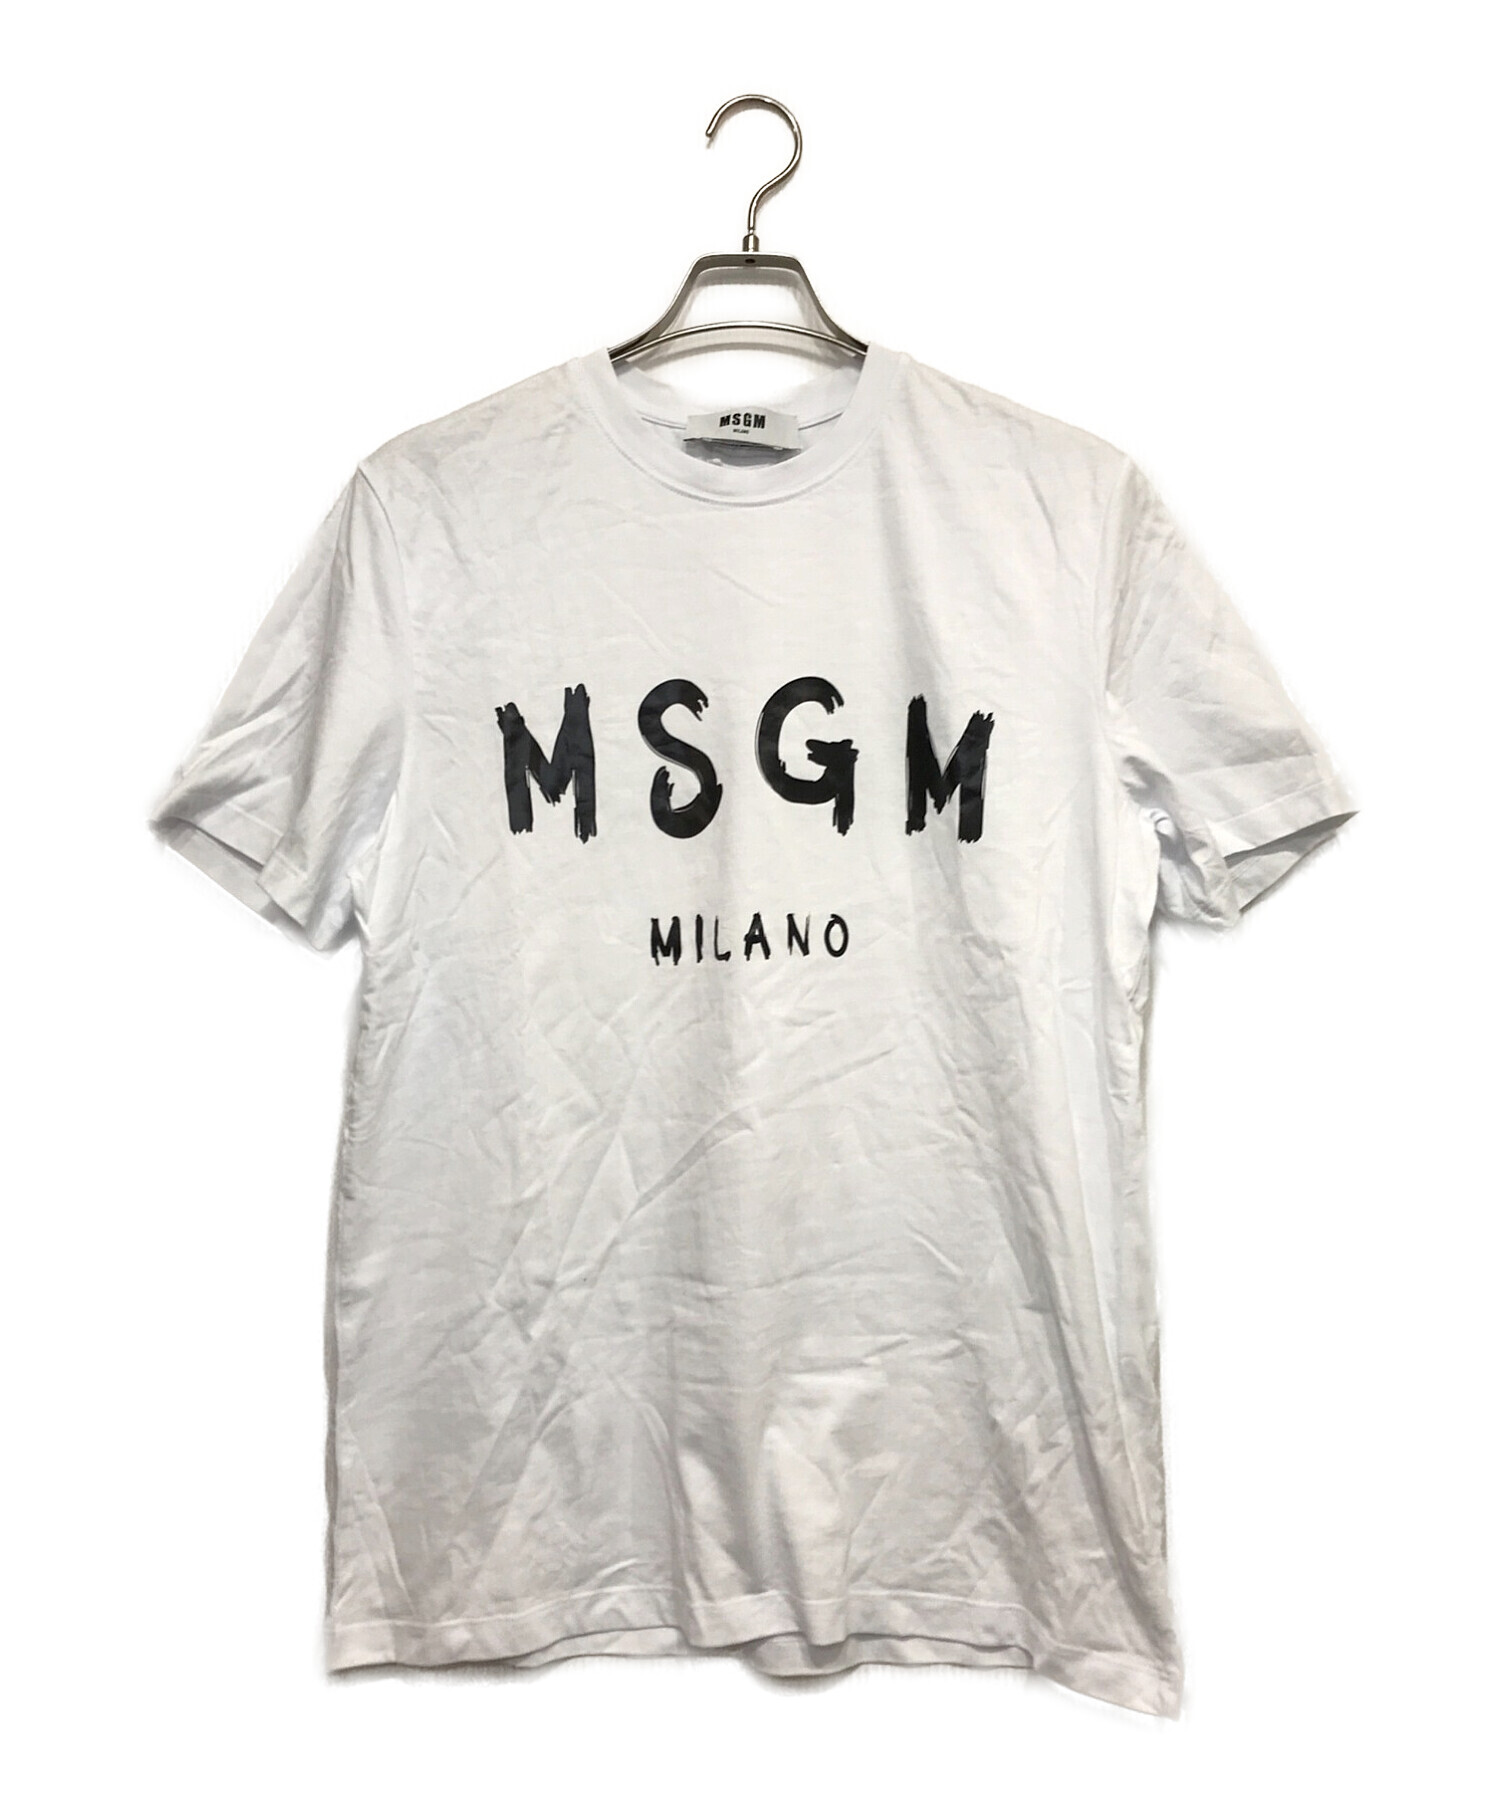 MSGM sizeS